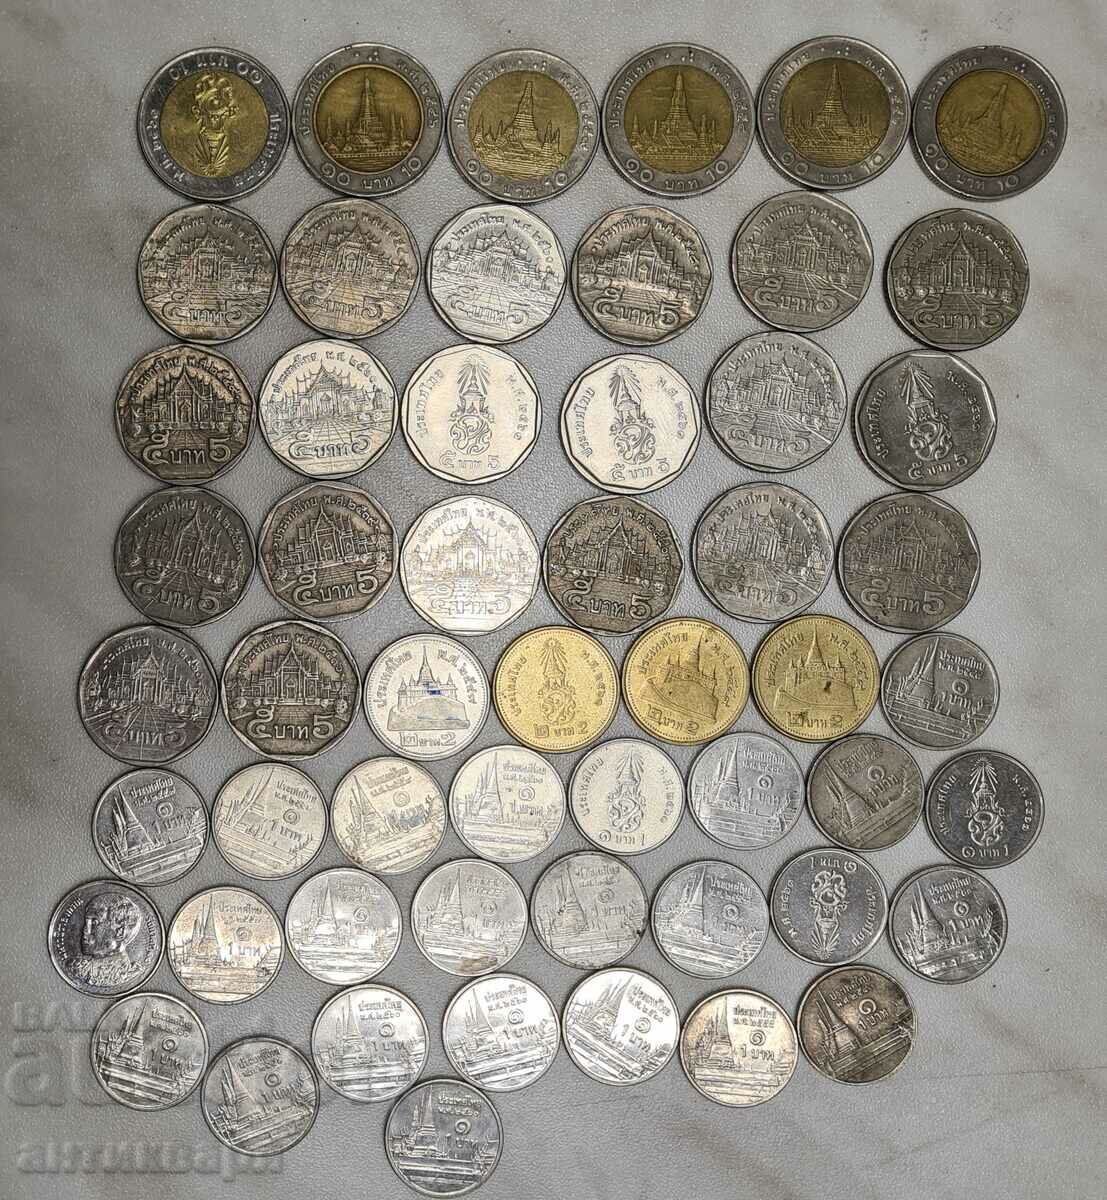 Thailand 10 5 2 1 baht lot coins